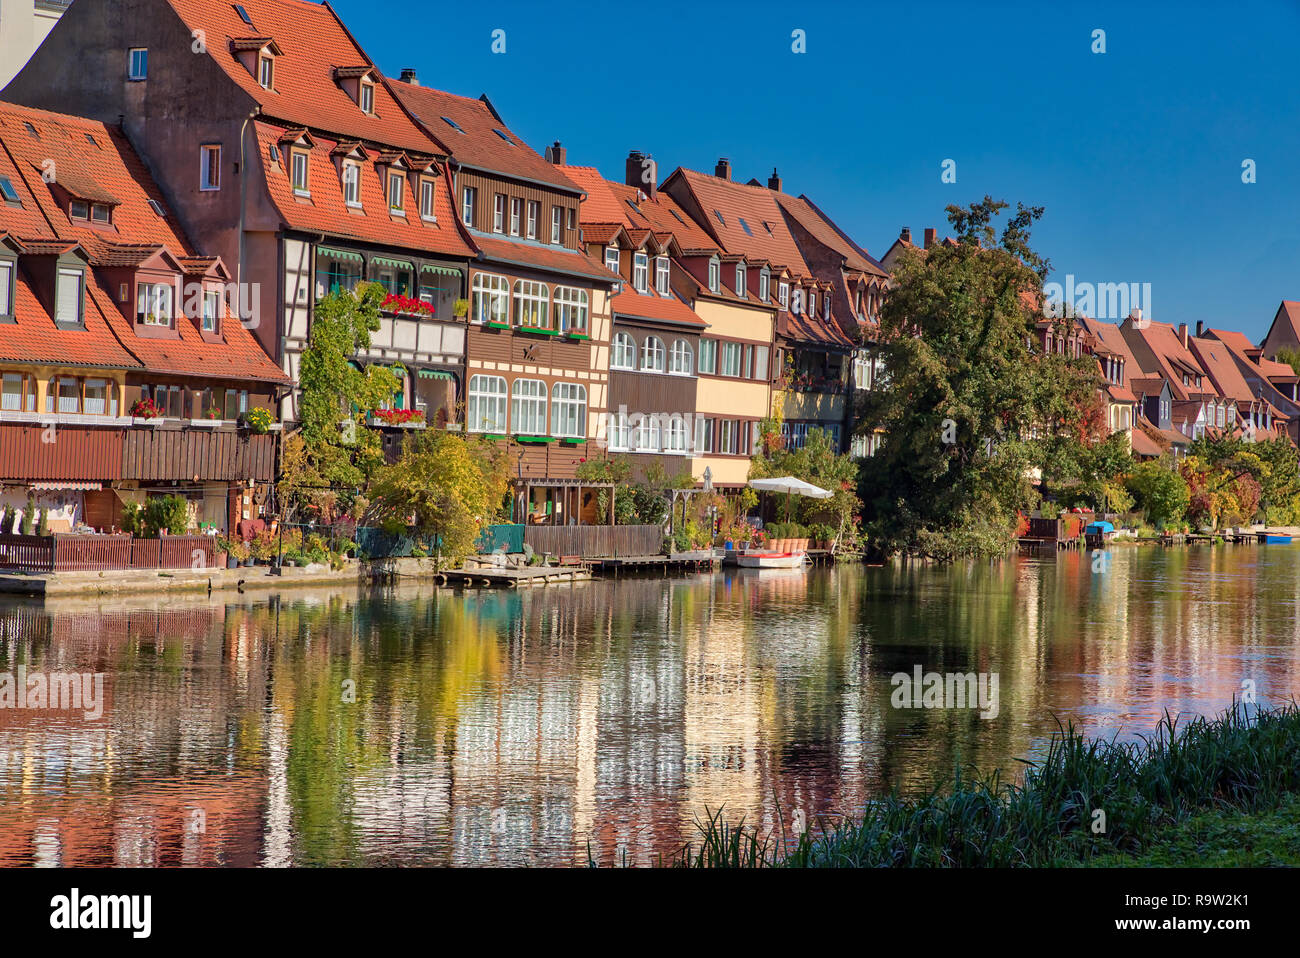 Housing in Bamberg,Germany Stock Photo